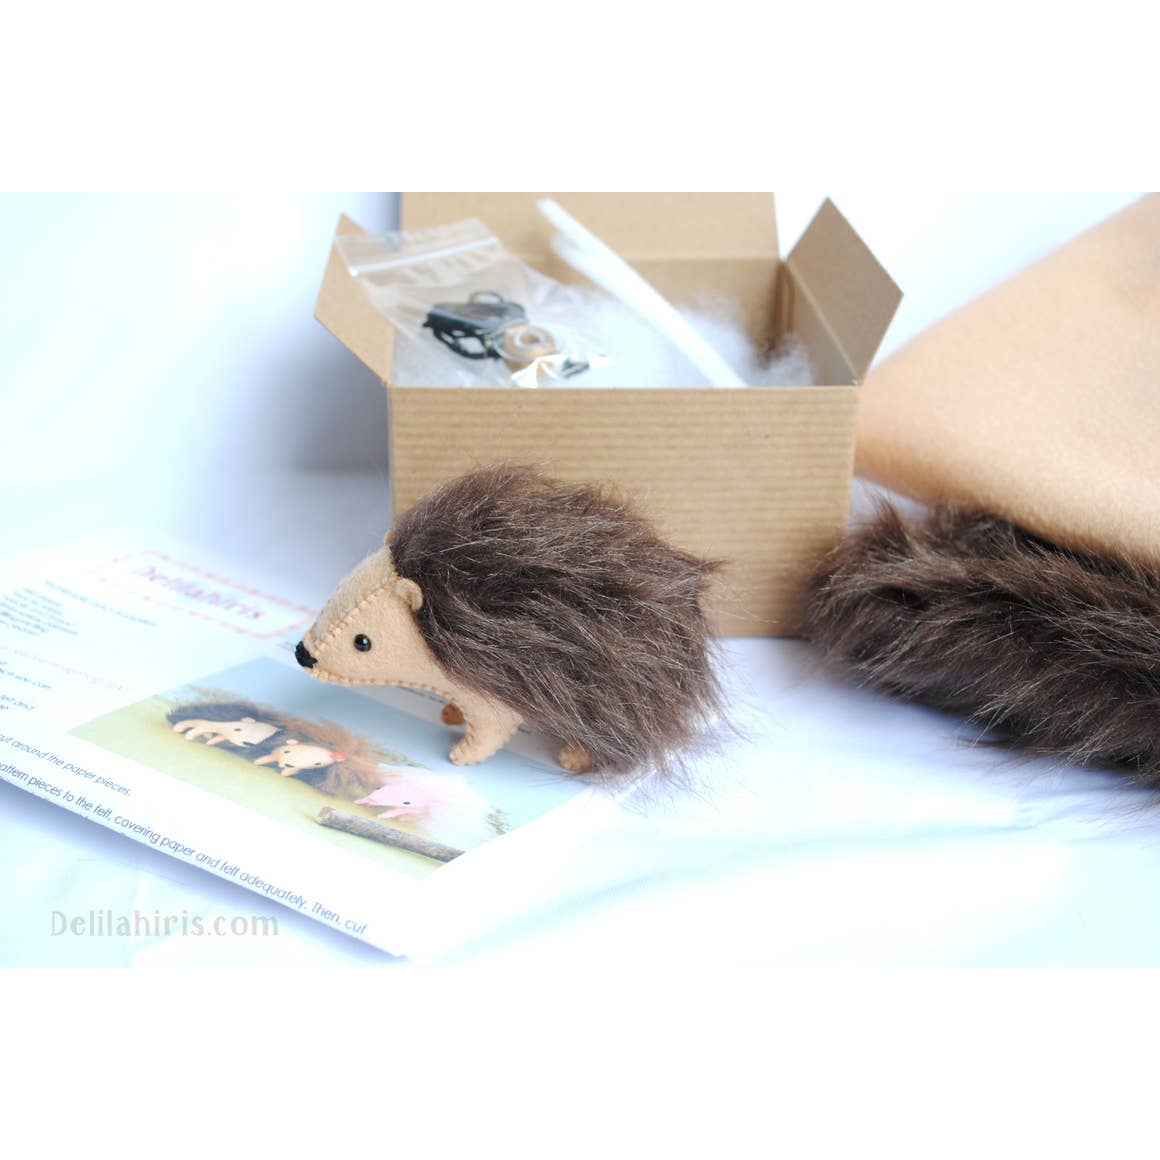 Delilah Iris Felt Hedgehog Hand Sewing Kit